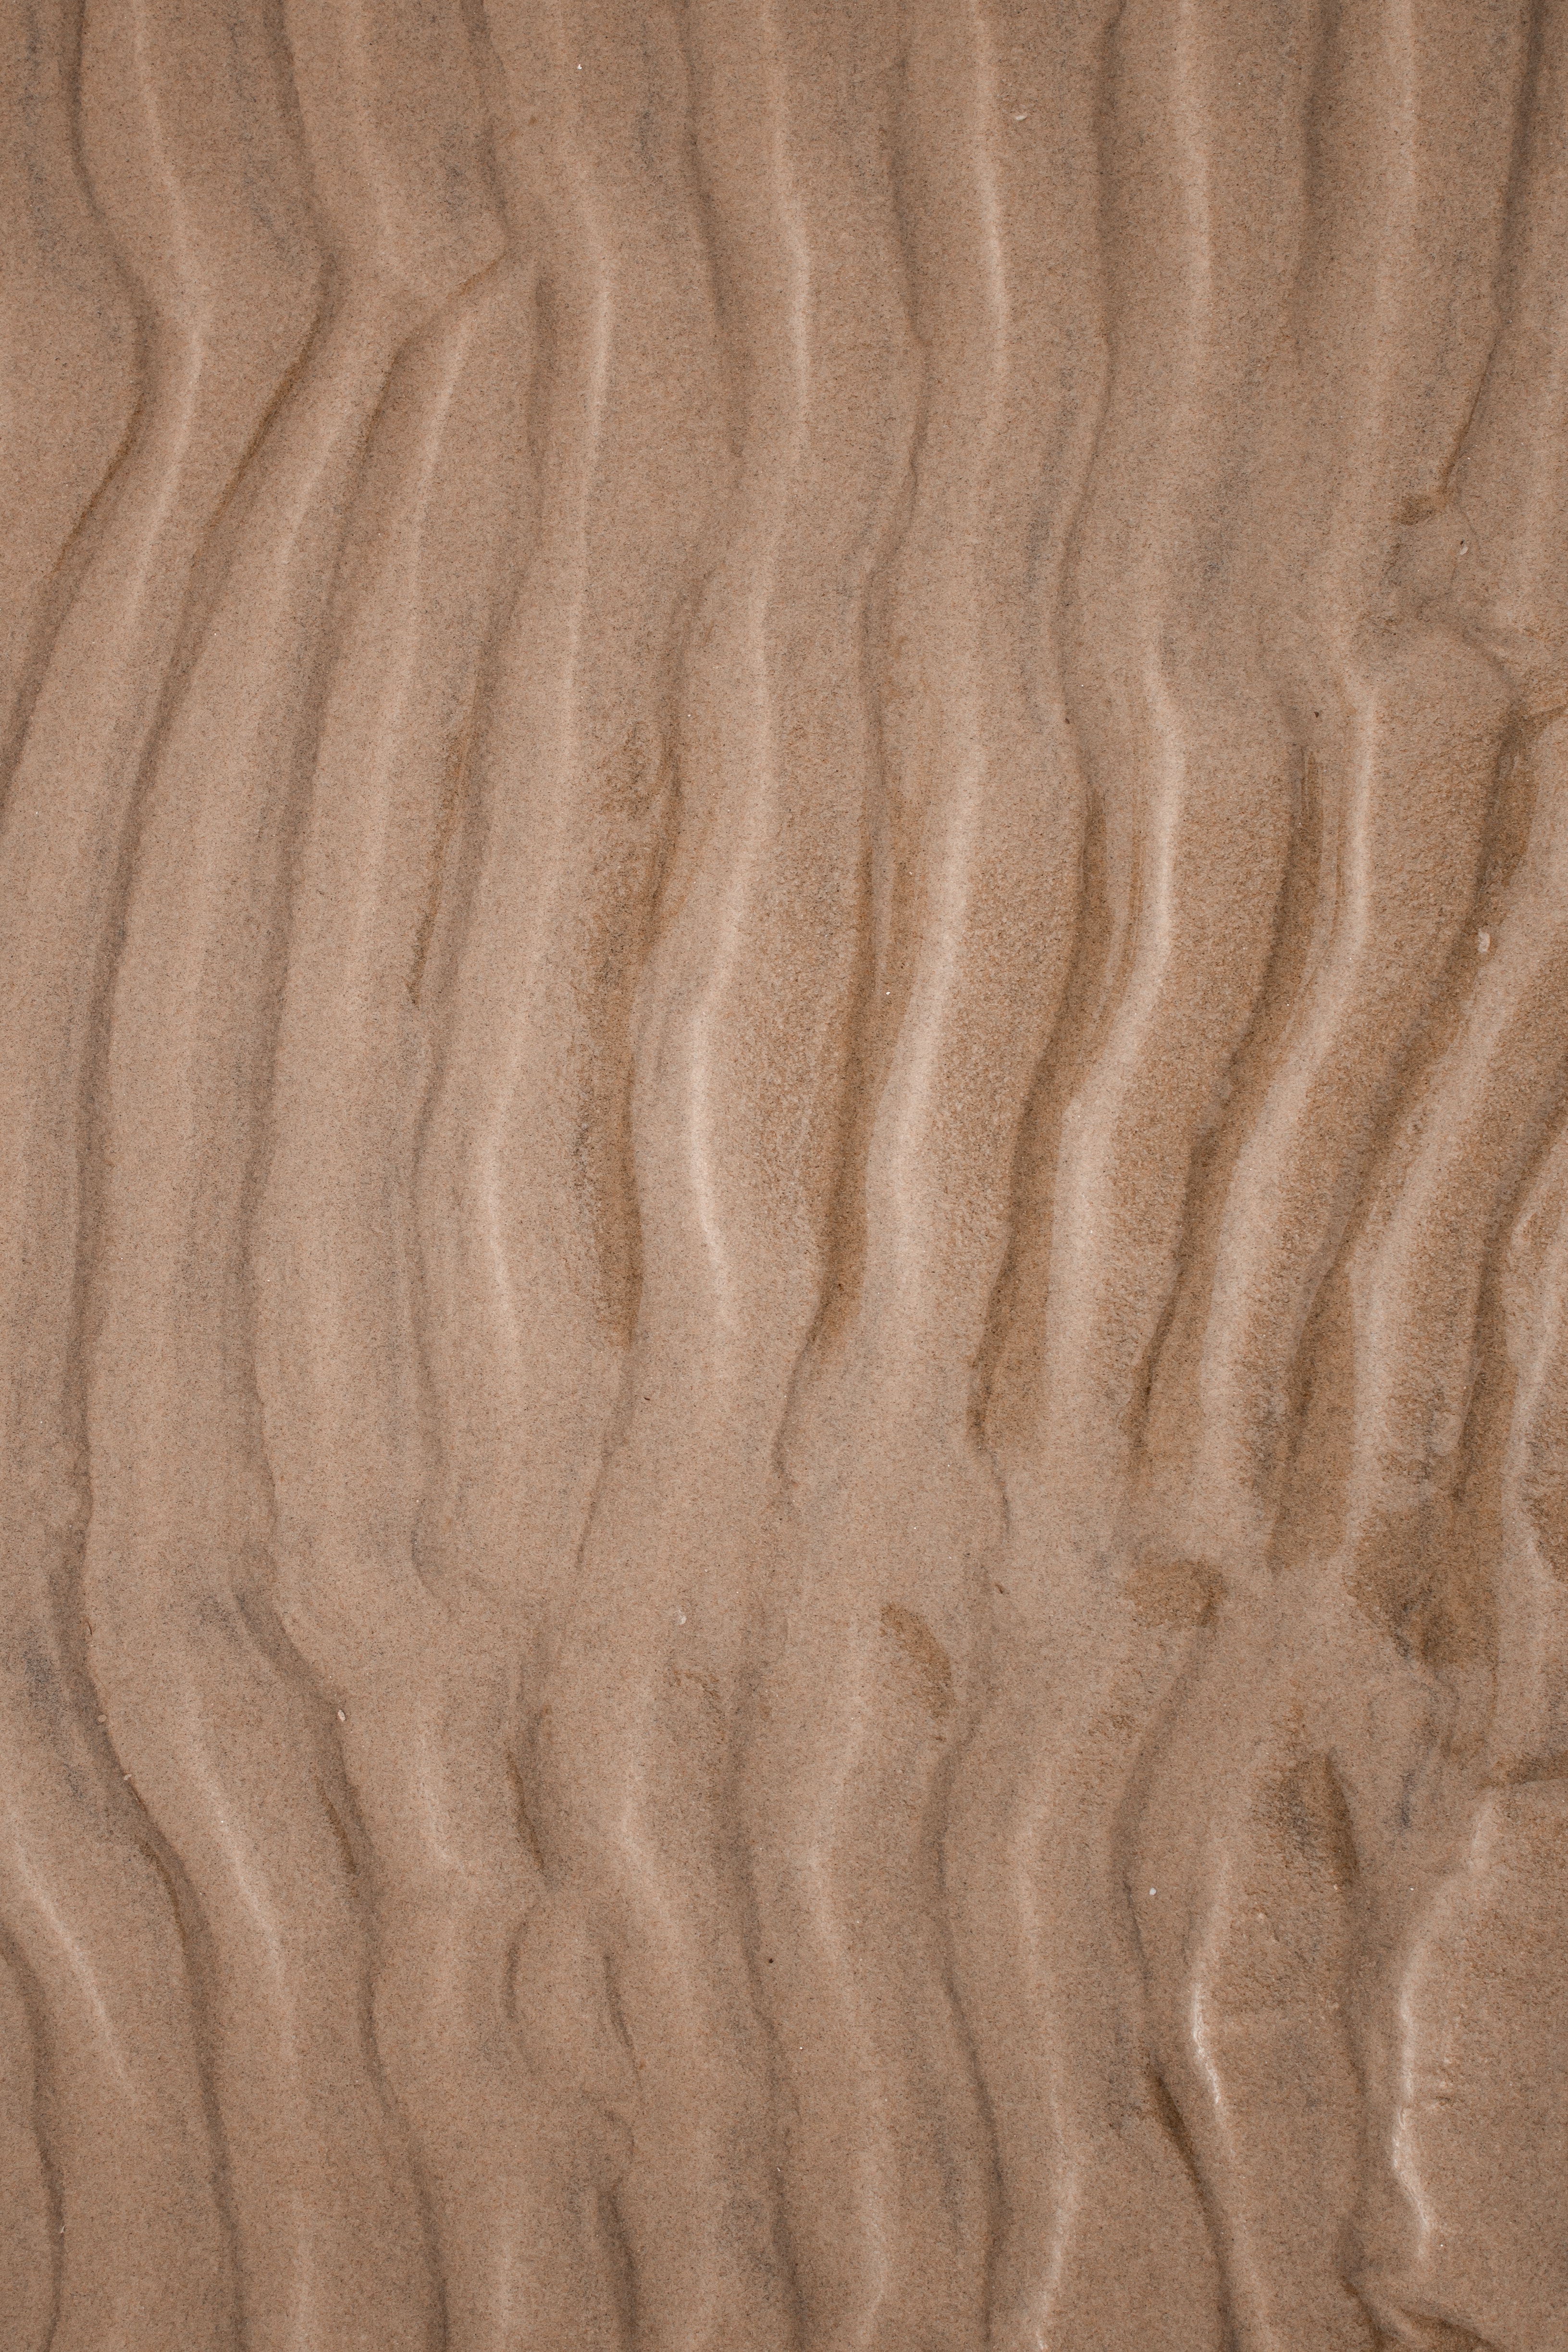 sand, texture, lines, textures, wavy, stripes, streaks